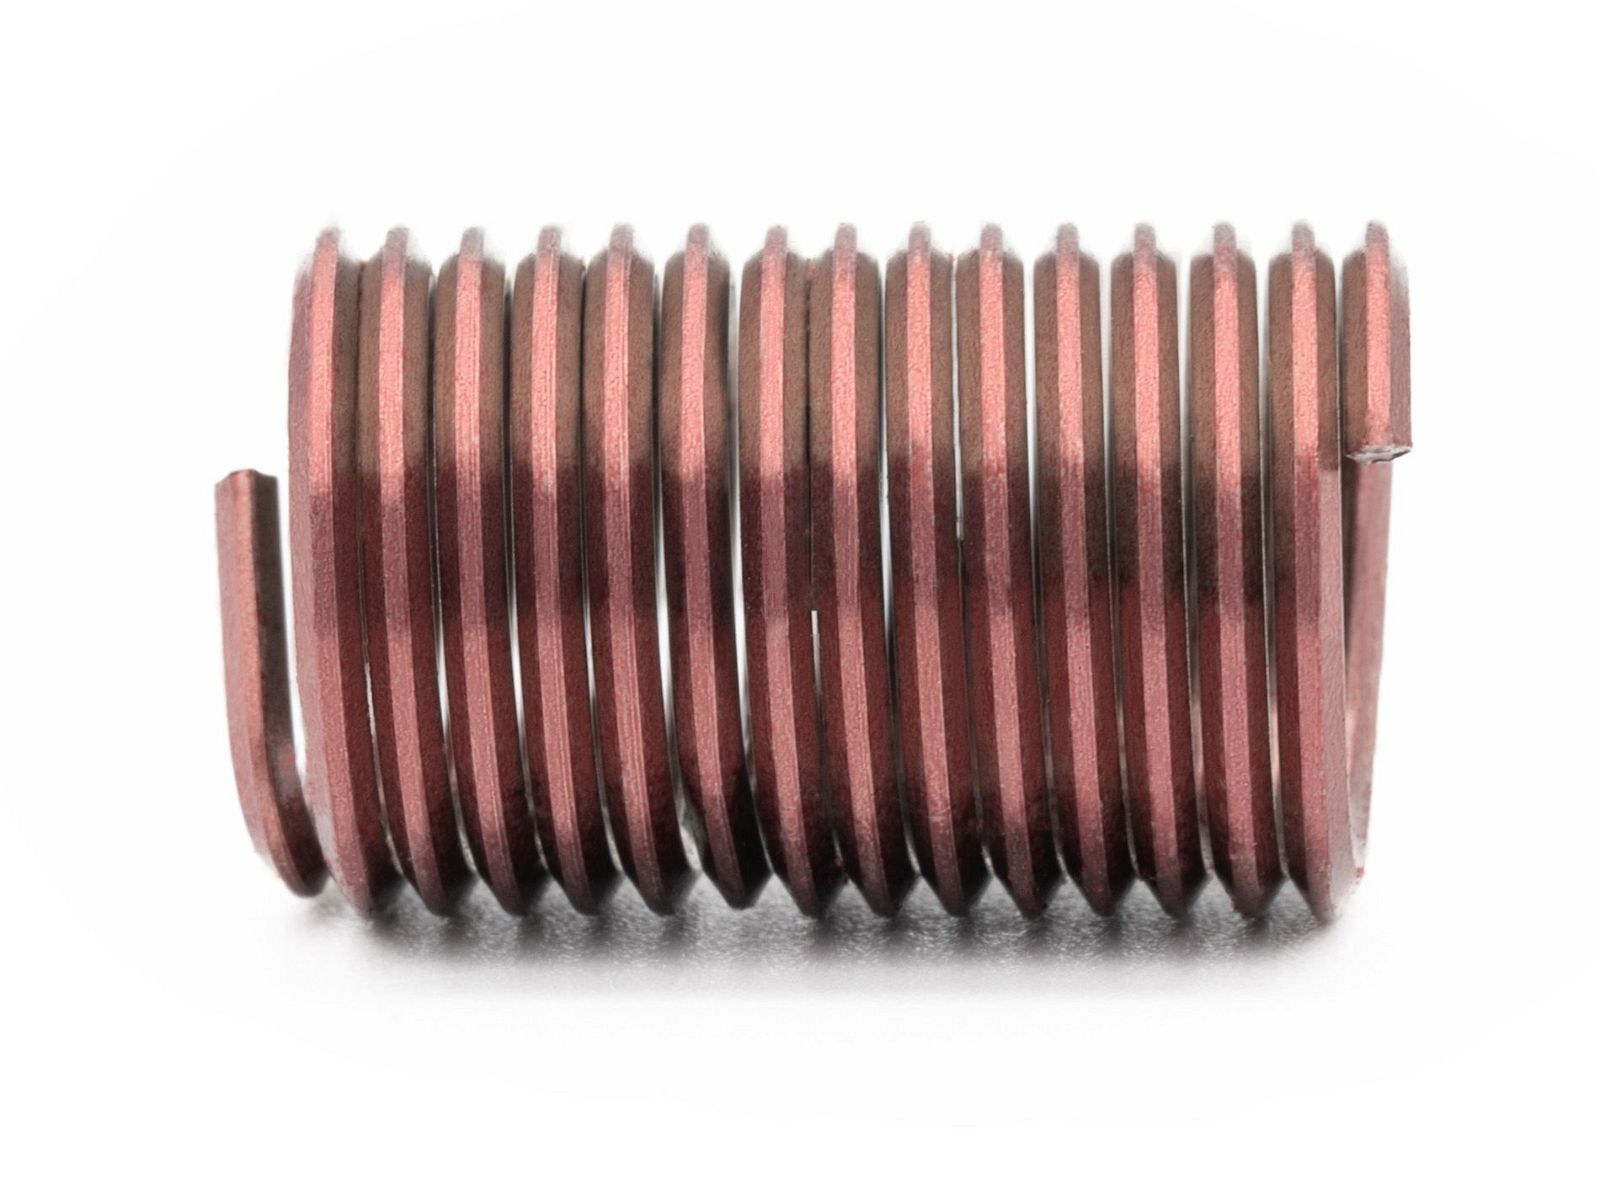 BaerCoil Drahtgewindeeinsätze M 5 x 0,8 - 2,5 D (12,5 mm) - screw grip (schraubensichernd) - 10 Stk.